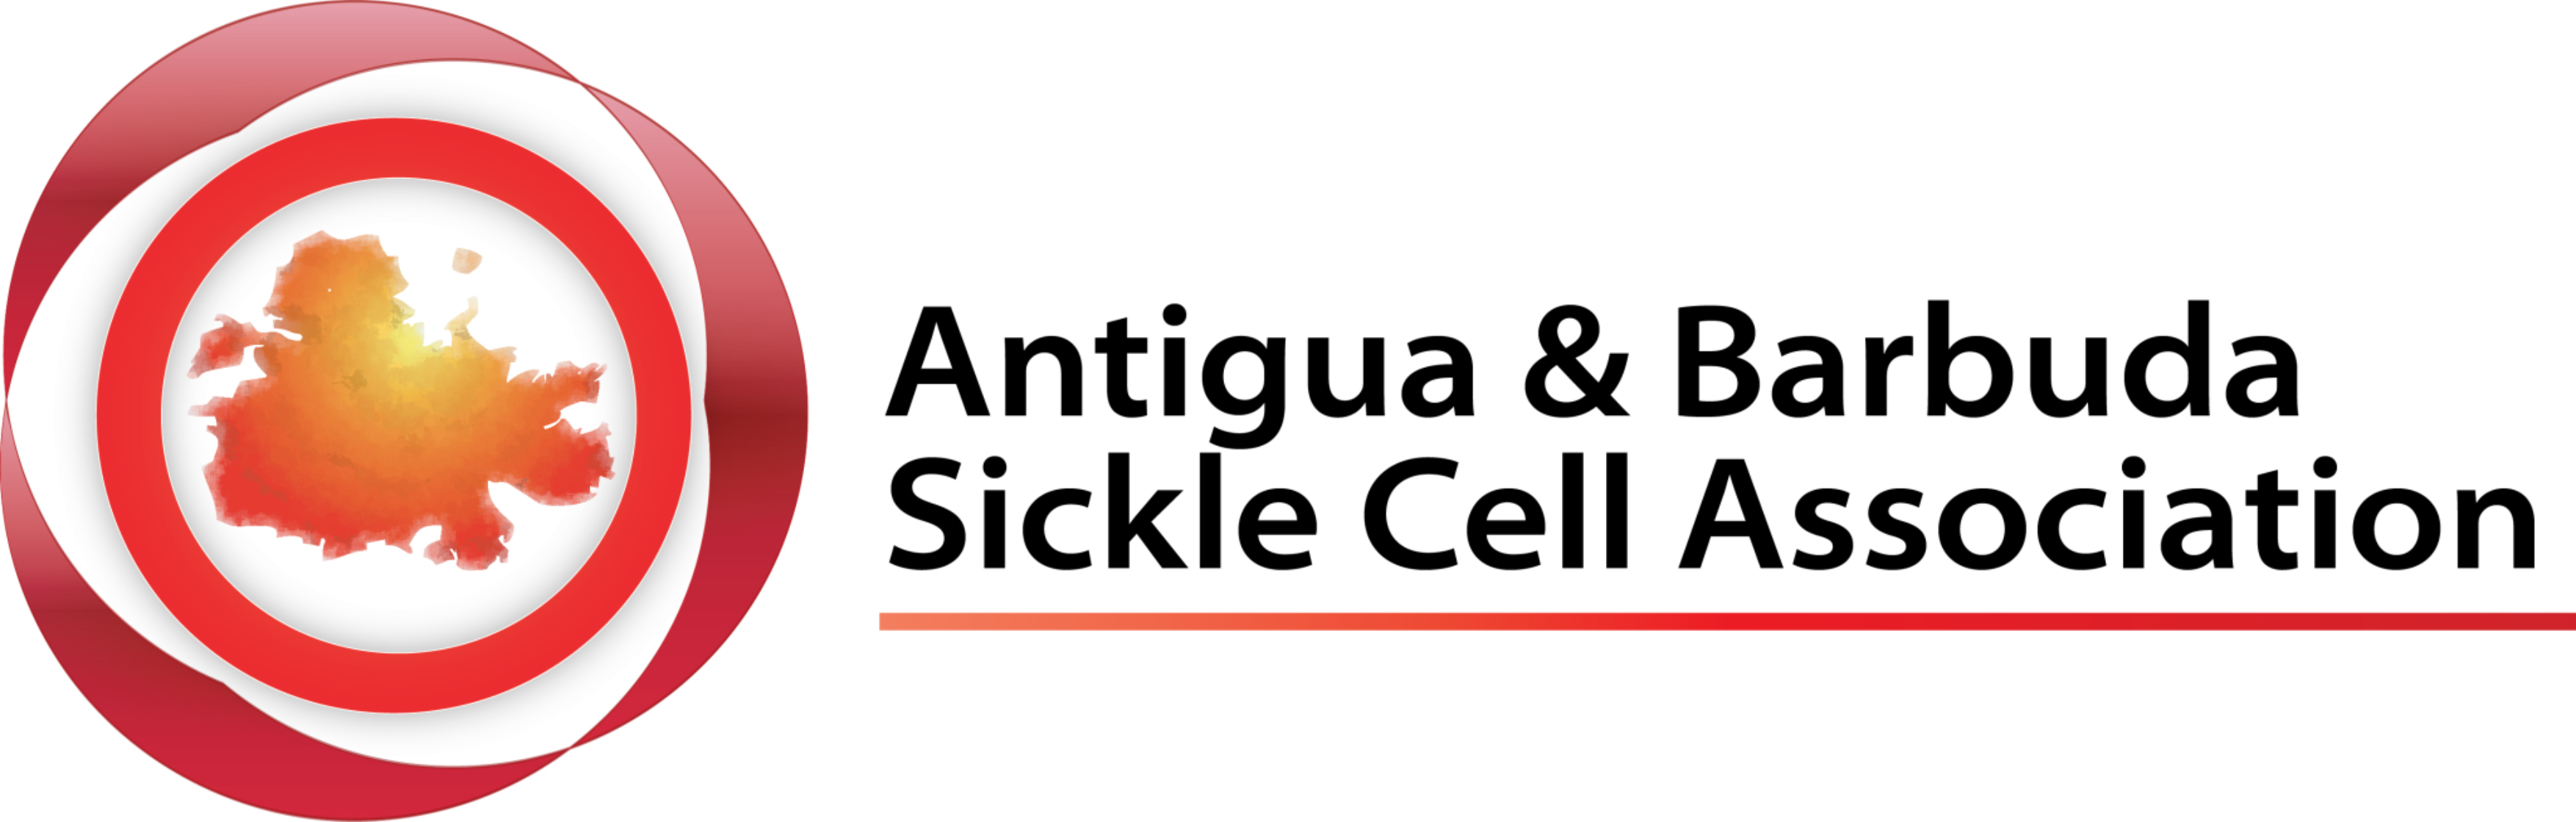 Antigua & Barbuda Sickle Cell Association